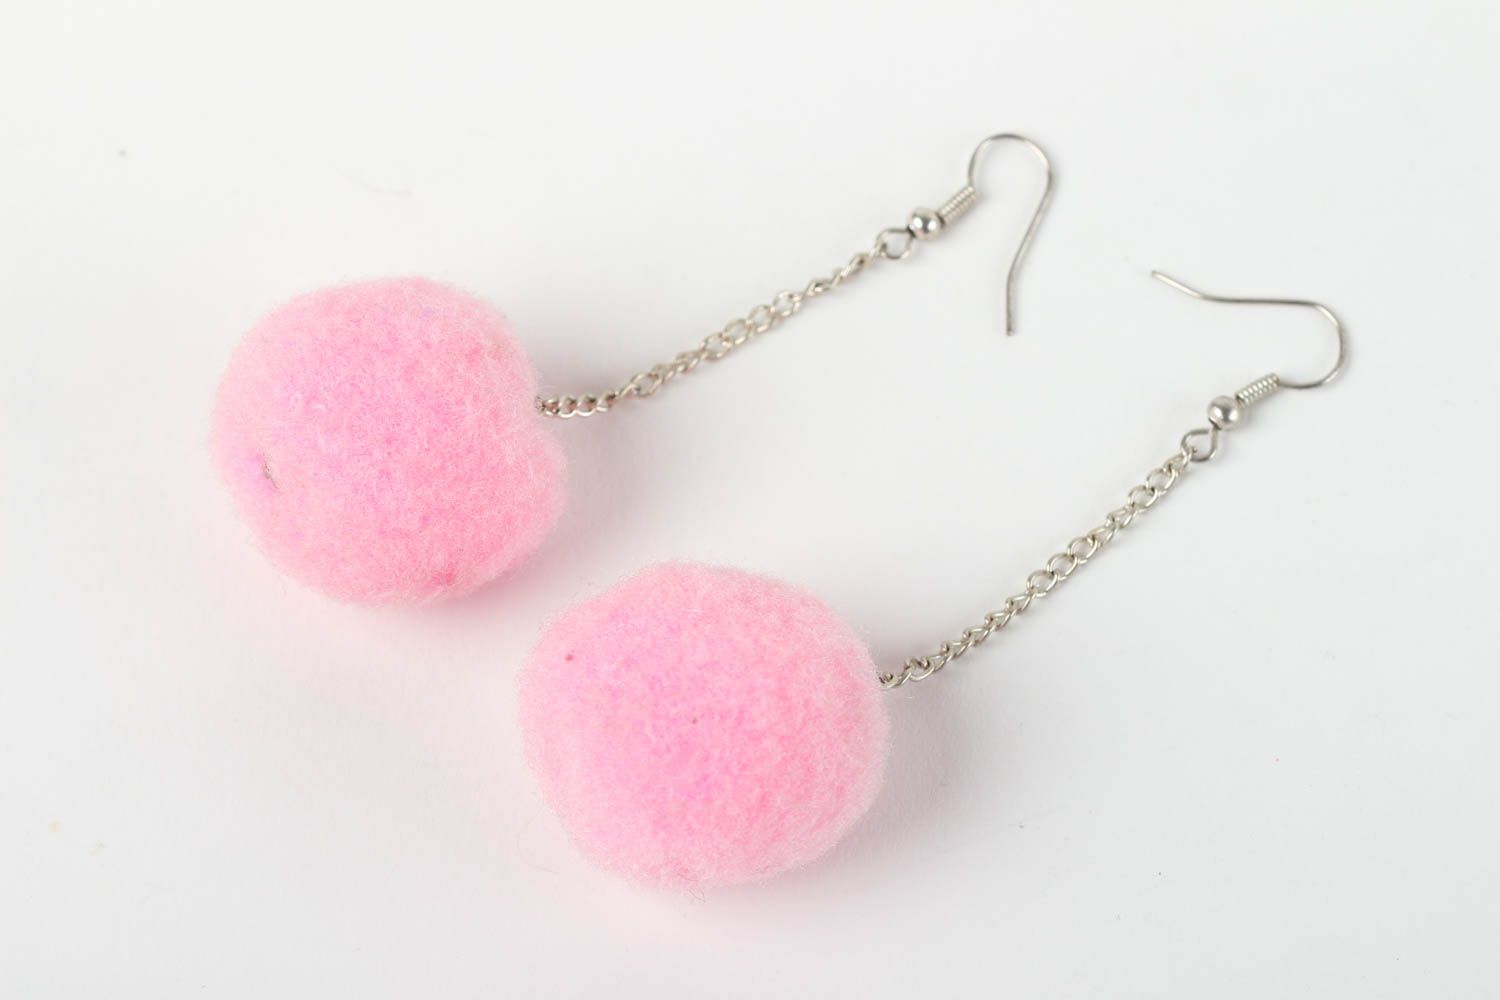 Designer handmade earrings stylish cute accessories unusual pink jewelry photo 2